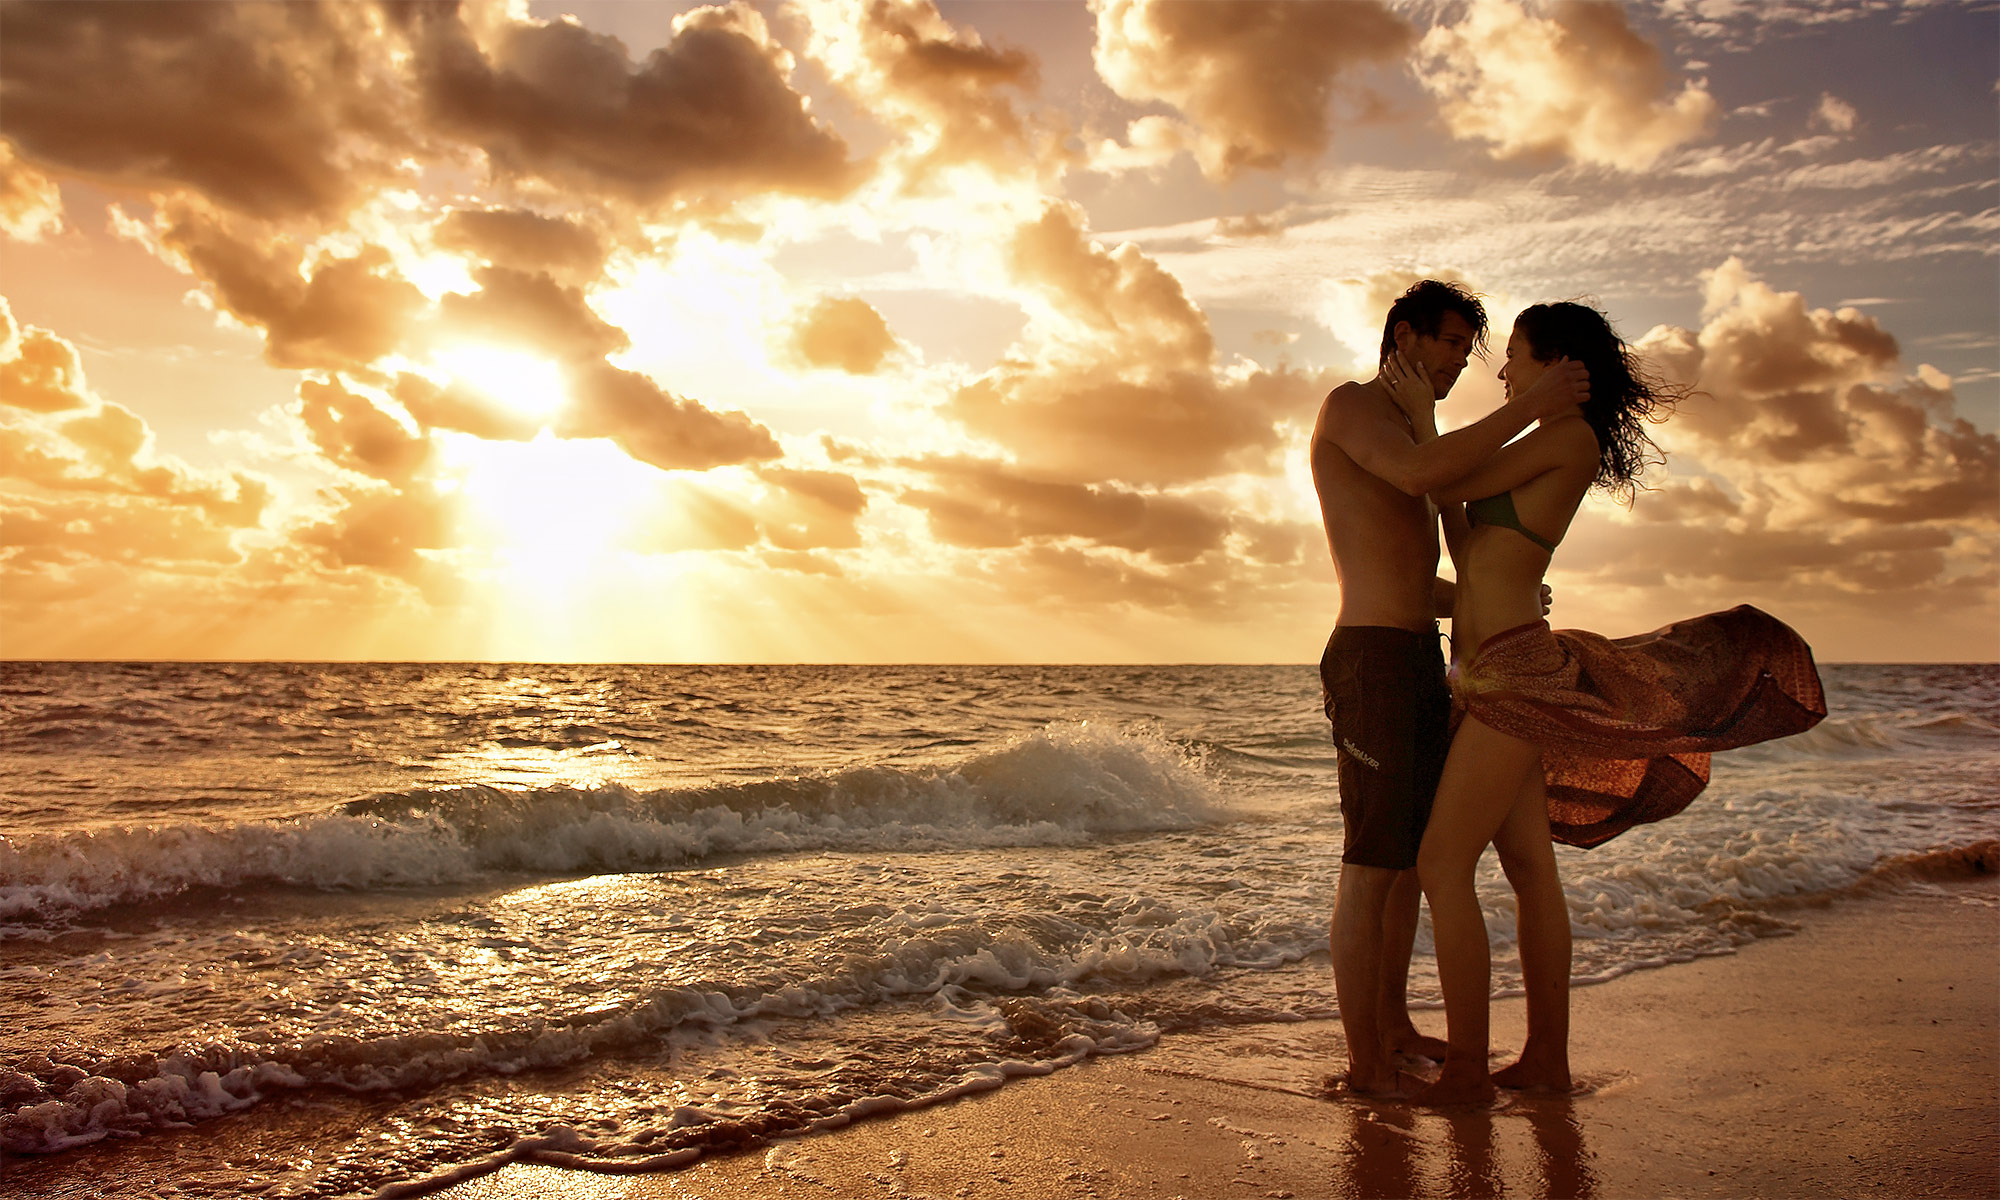 Cancun-Paradisus-Resort-Lifestyle-Sunrise-Beach